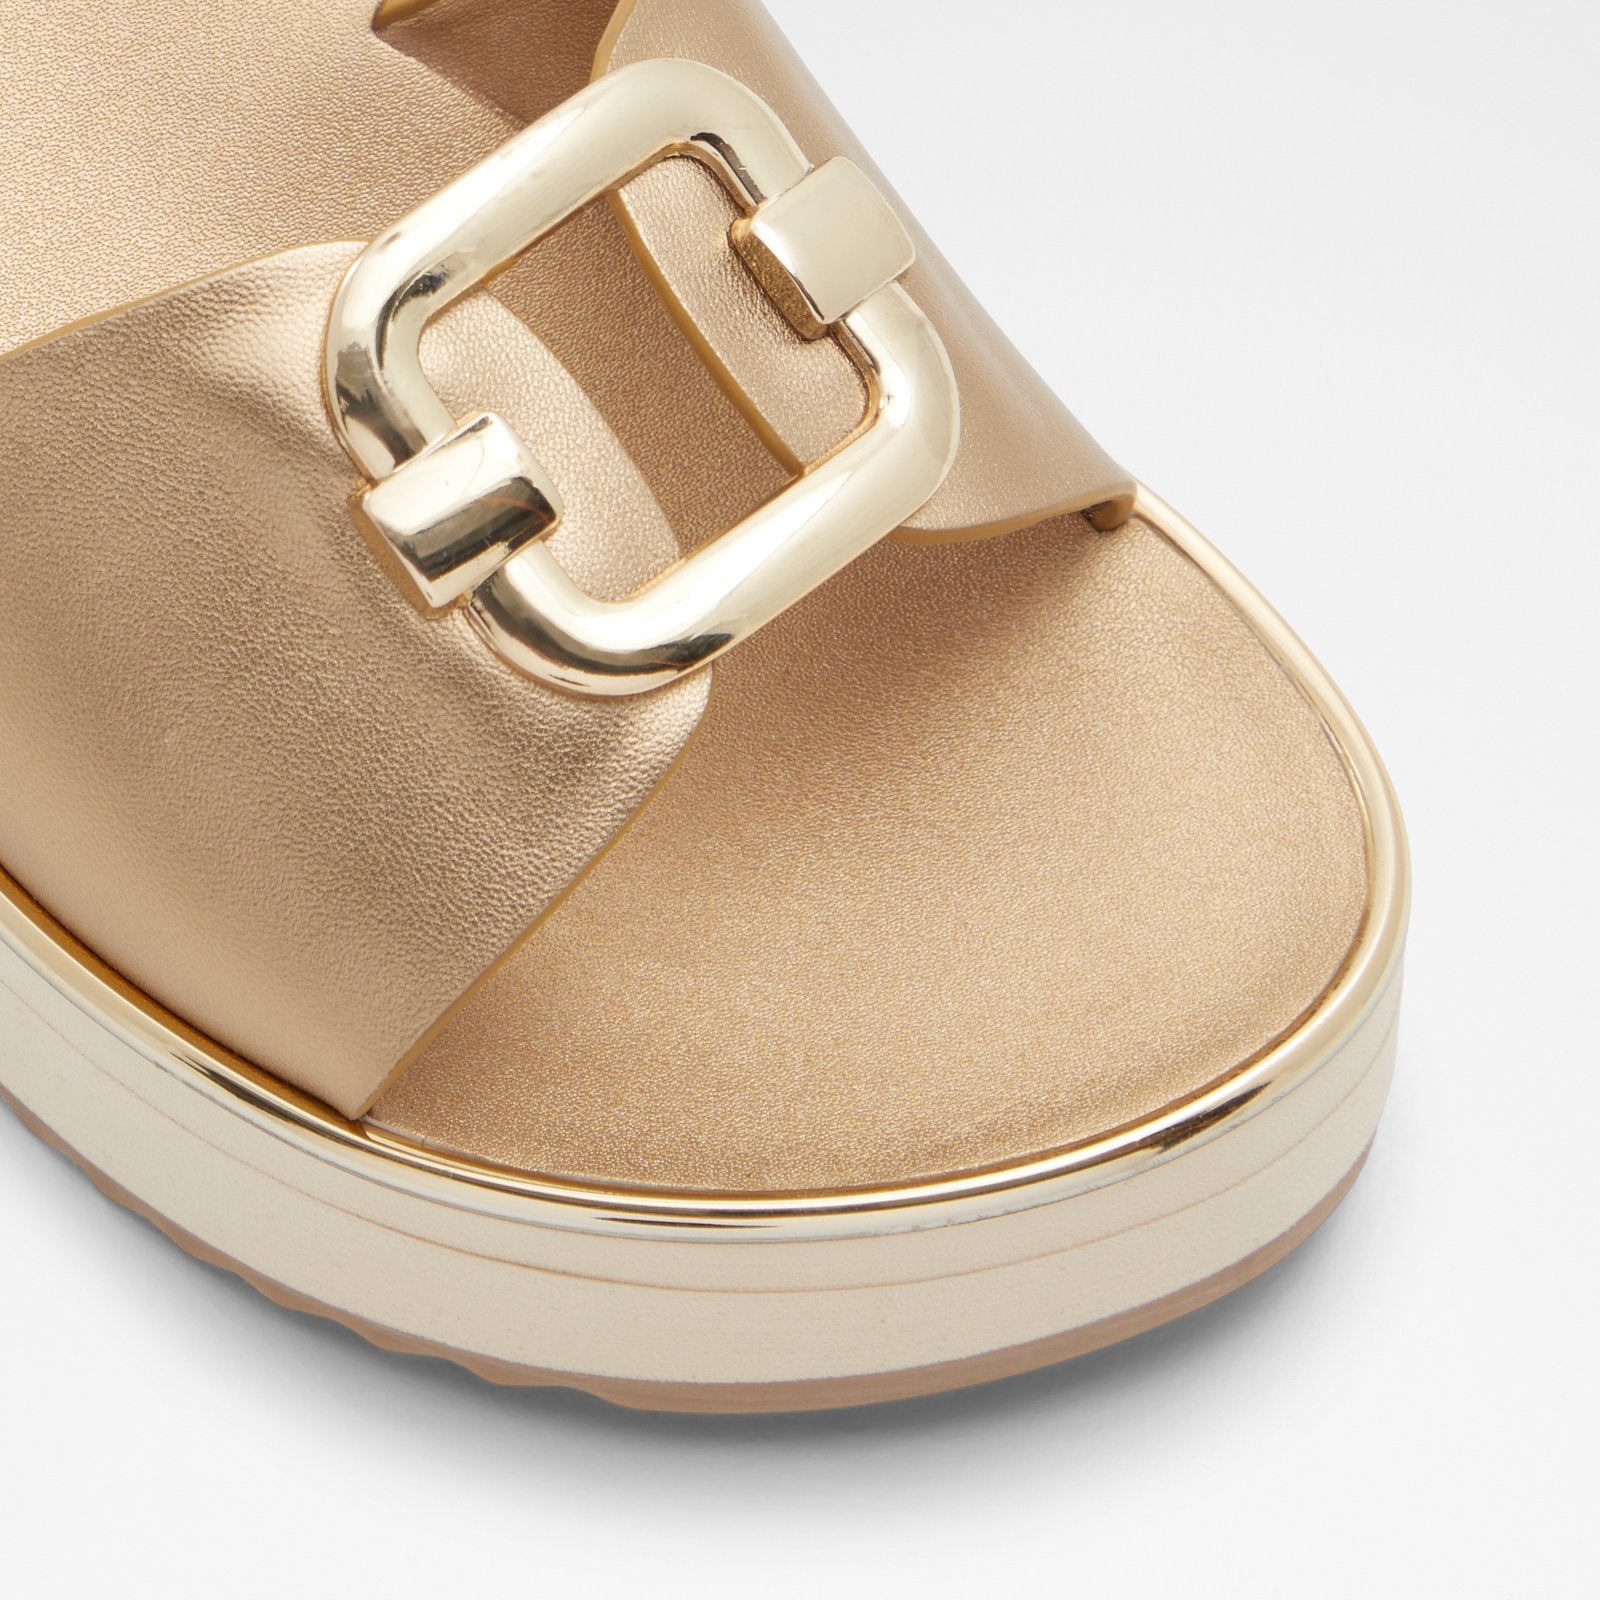 Onayllan / Beach Sandals Women Shoes - Gold - ALDO KSA